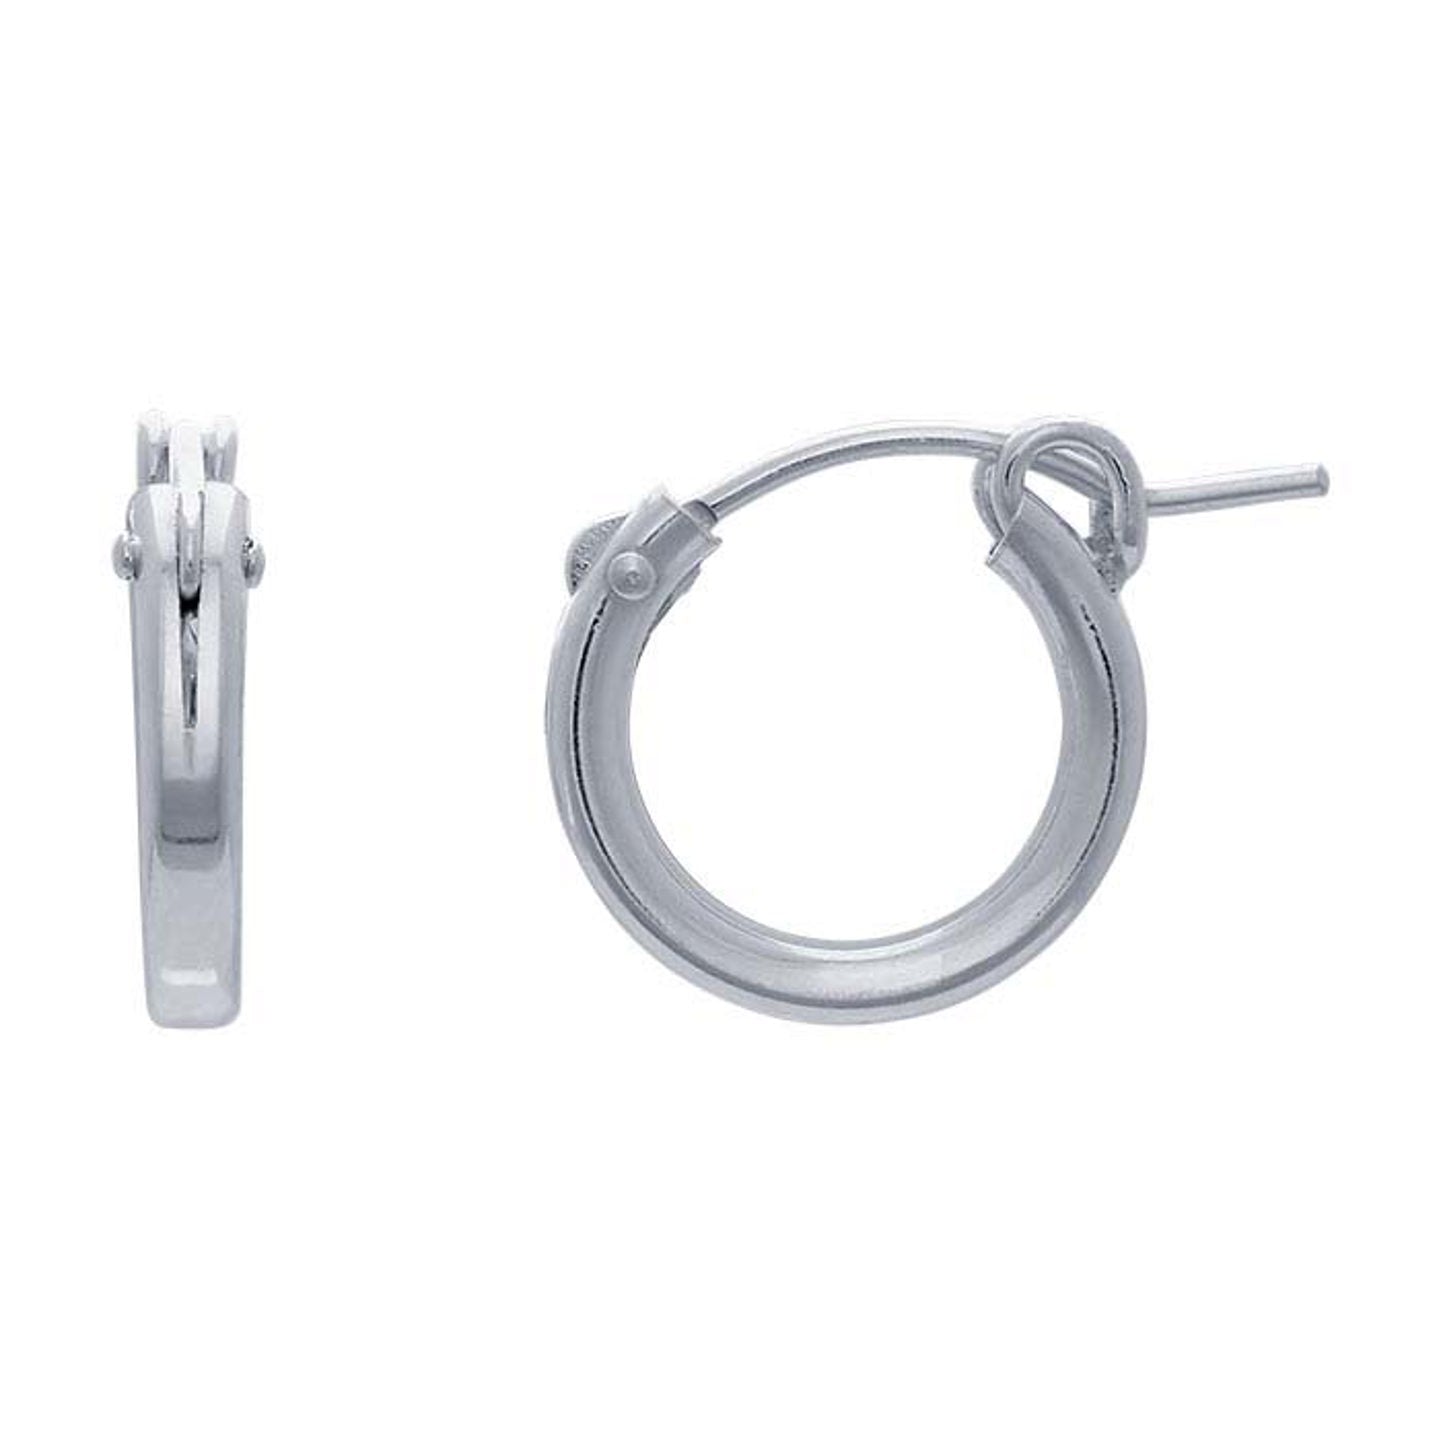 13mm diameter hoop earring with simple latch sterling silver anti-tarnish hypoallergenic 